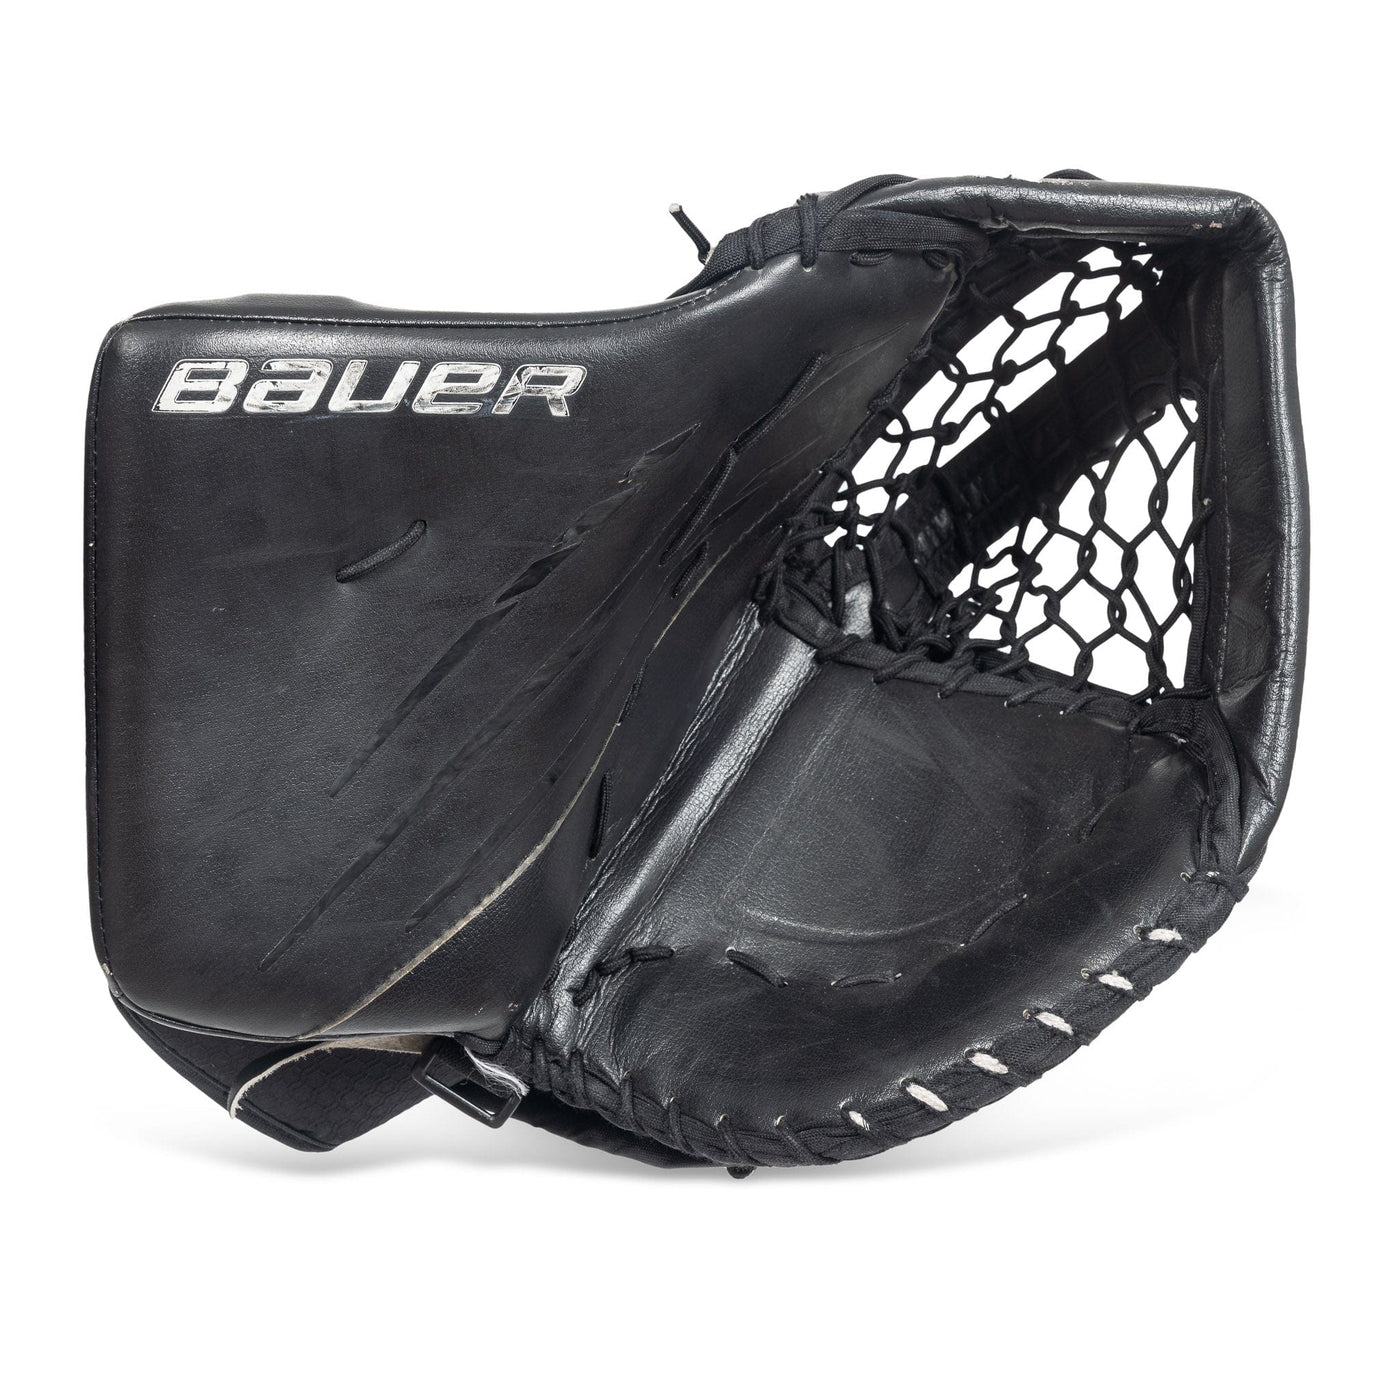 Bauer Vapor HyperLite Senior Goalie Glove Set - USED #3 - TheHockeyShop.com